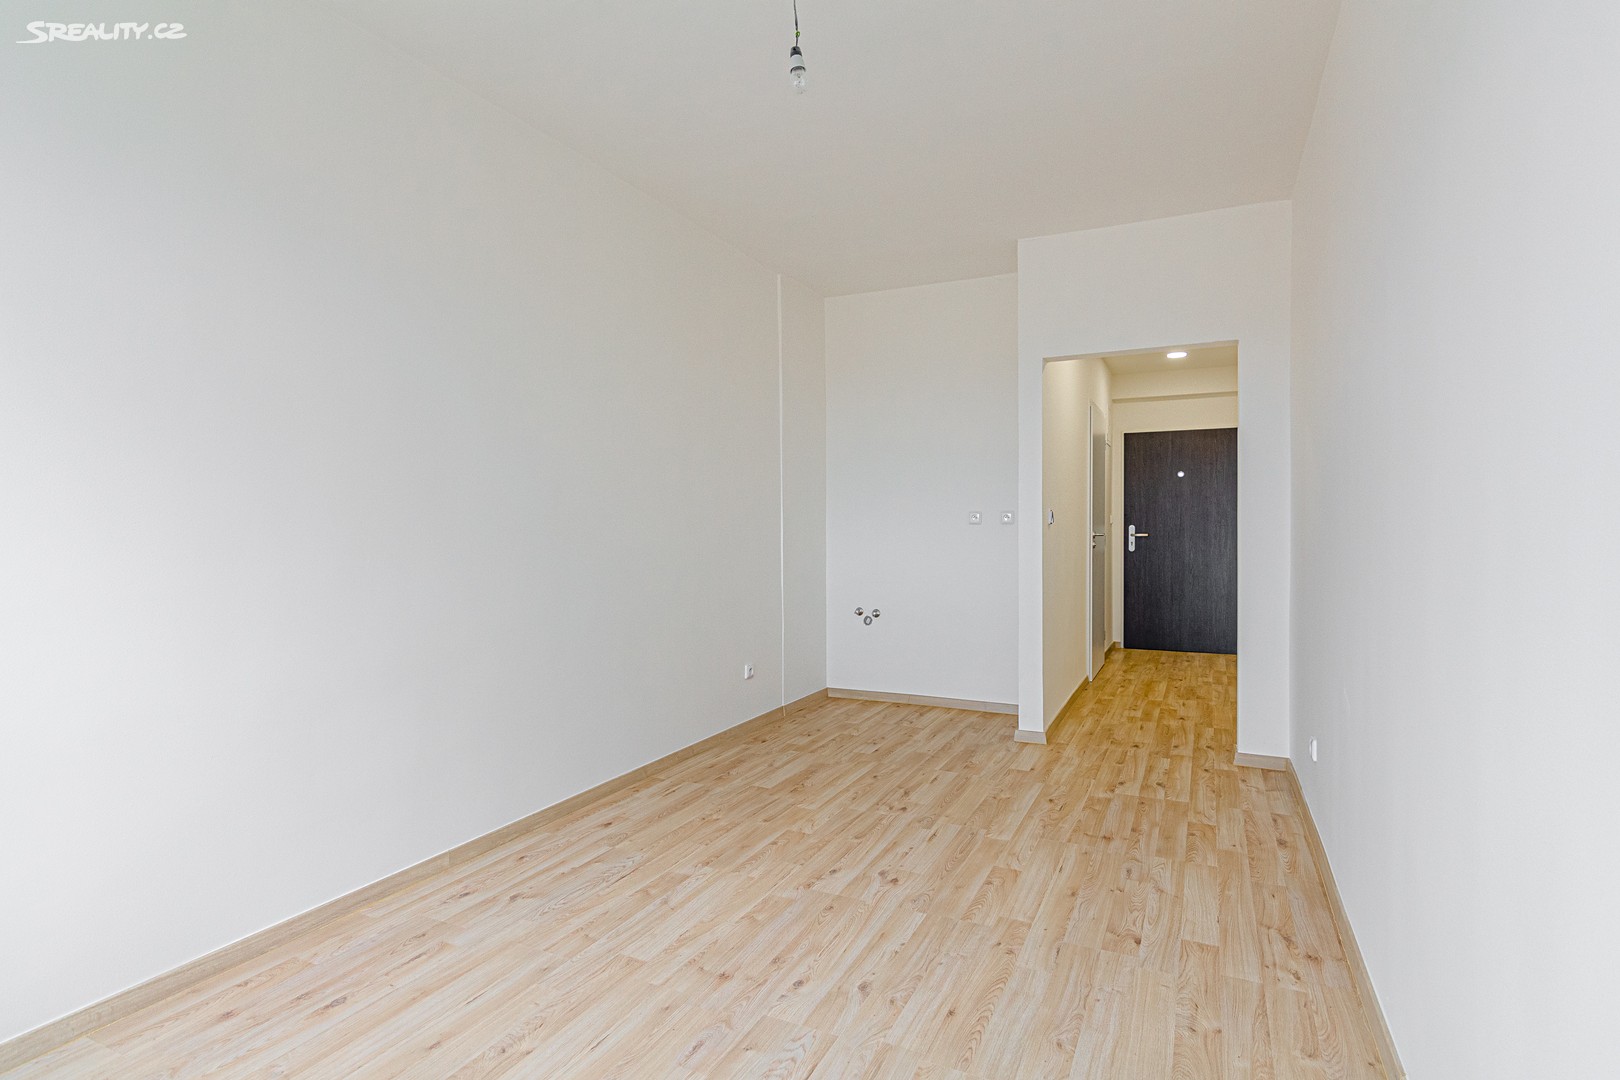 Prodej bytu 1+kk 24 m², Peroutkova, Praha 5 - Jinonice